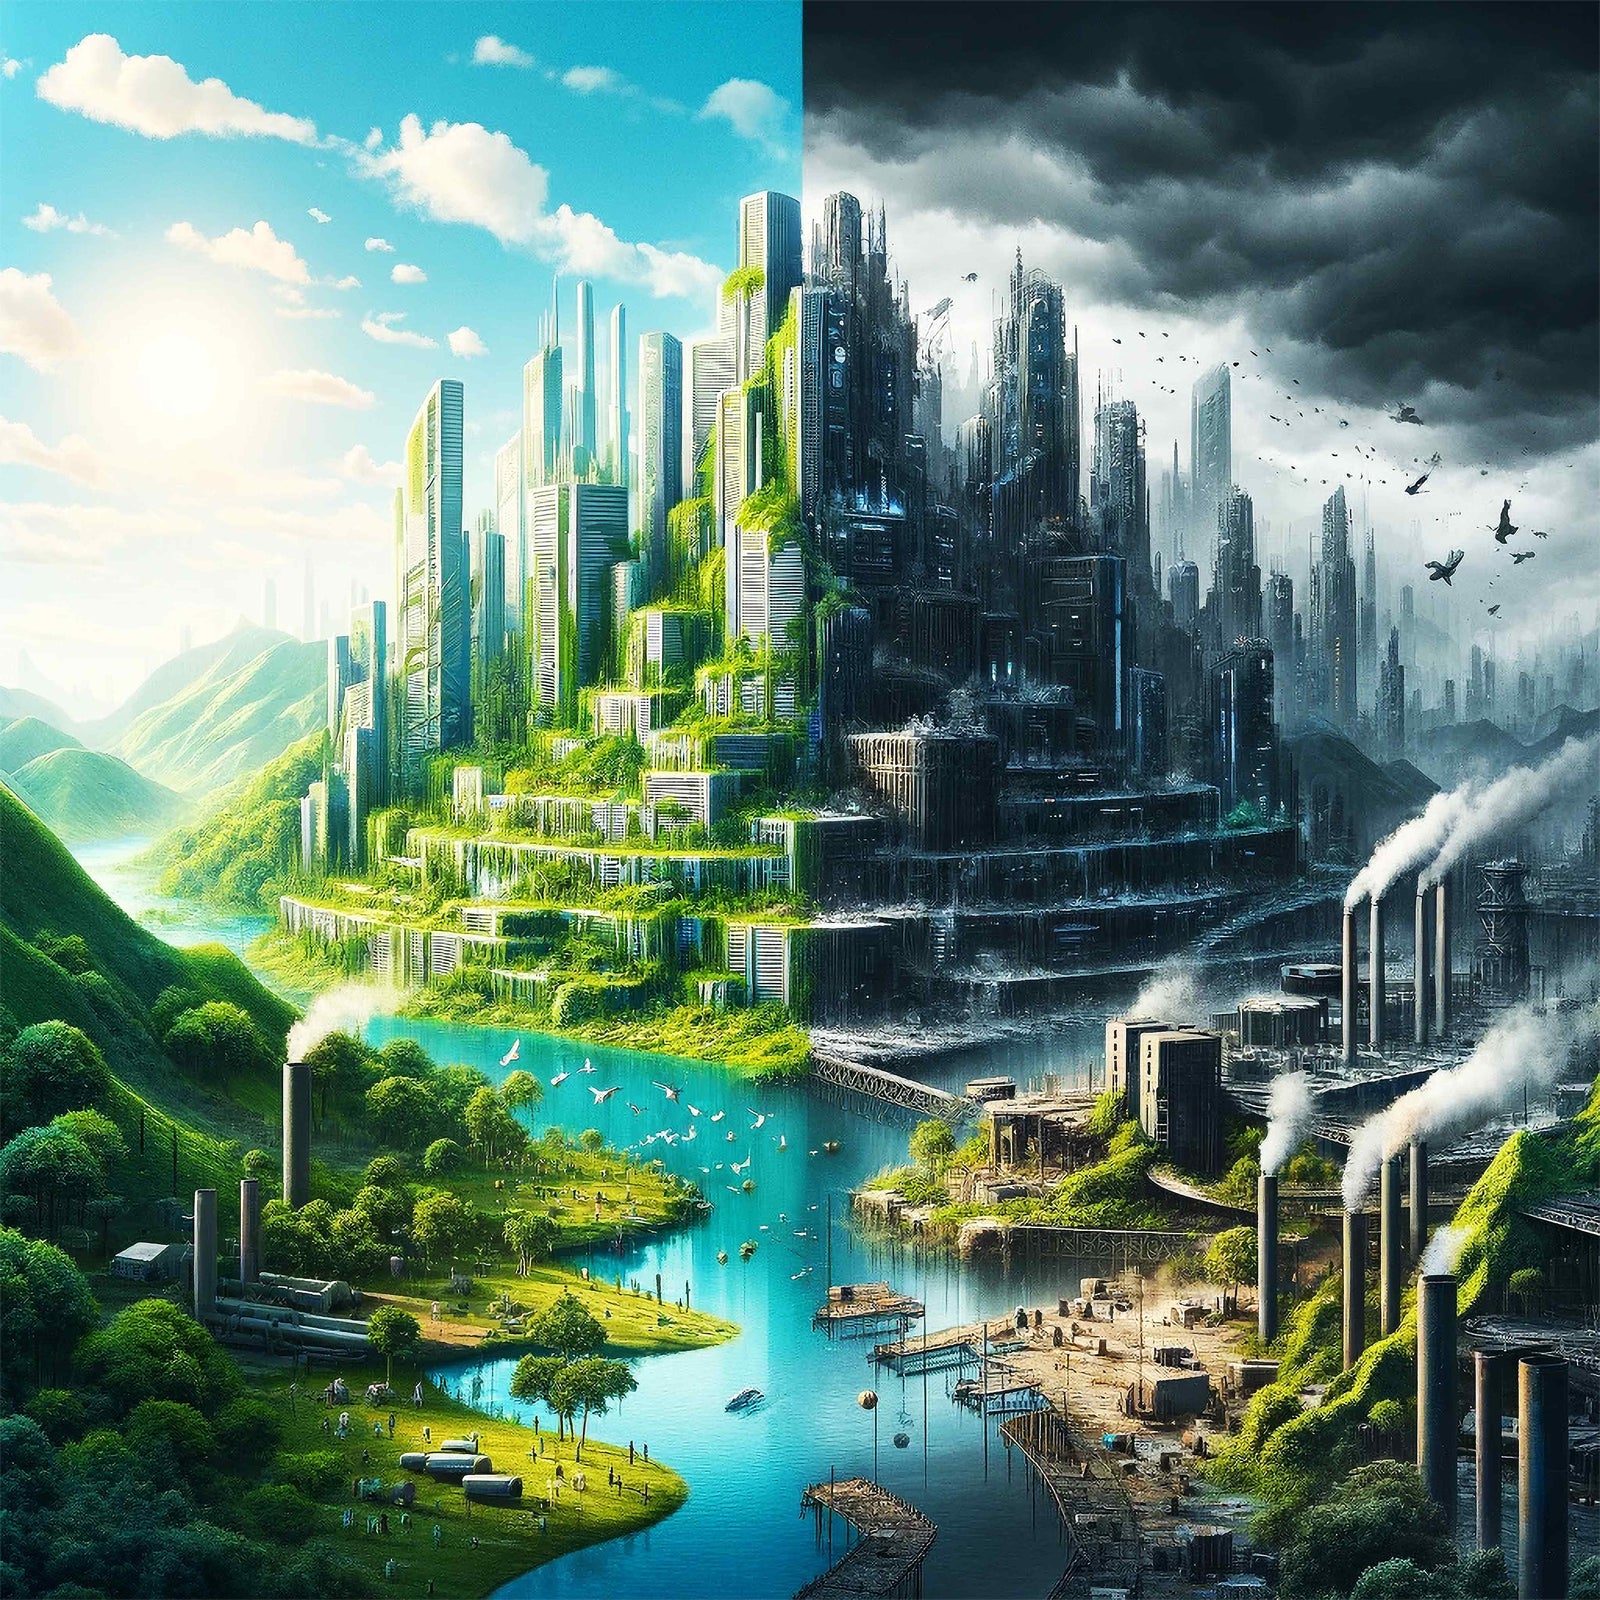 Utopian/Dystopian Imagination